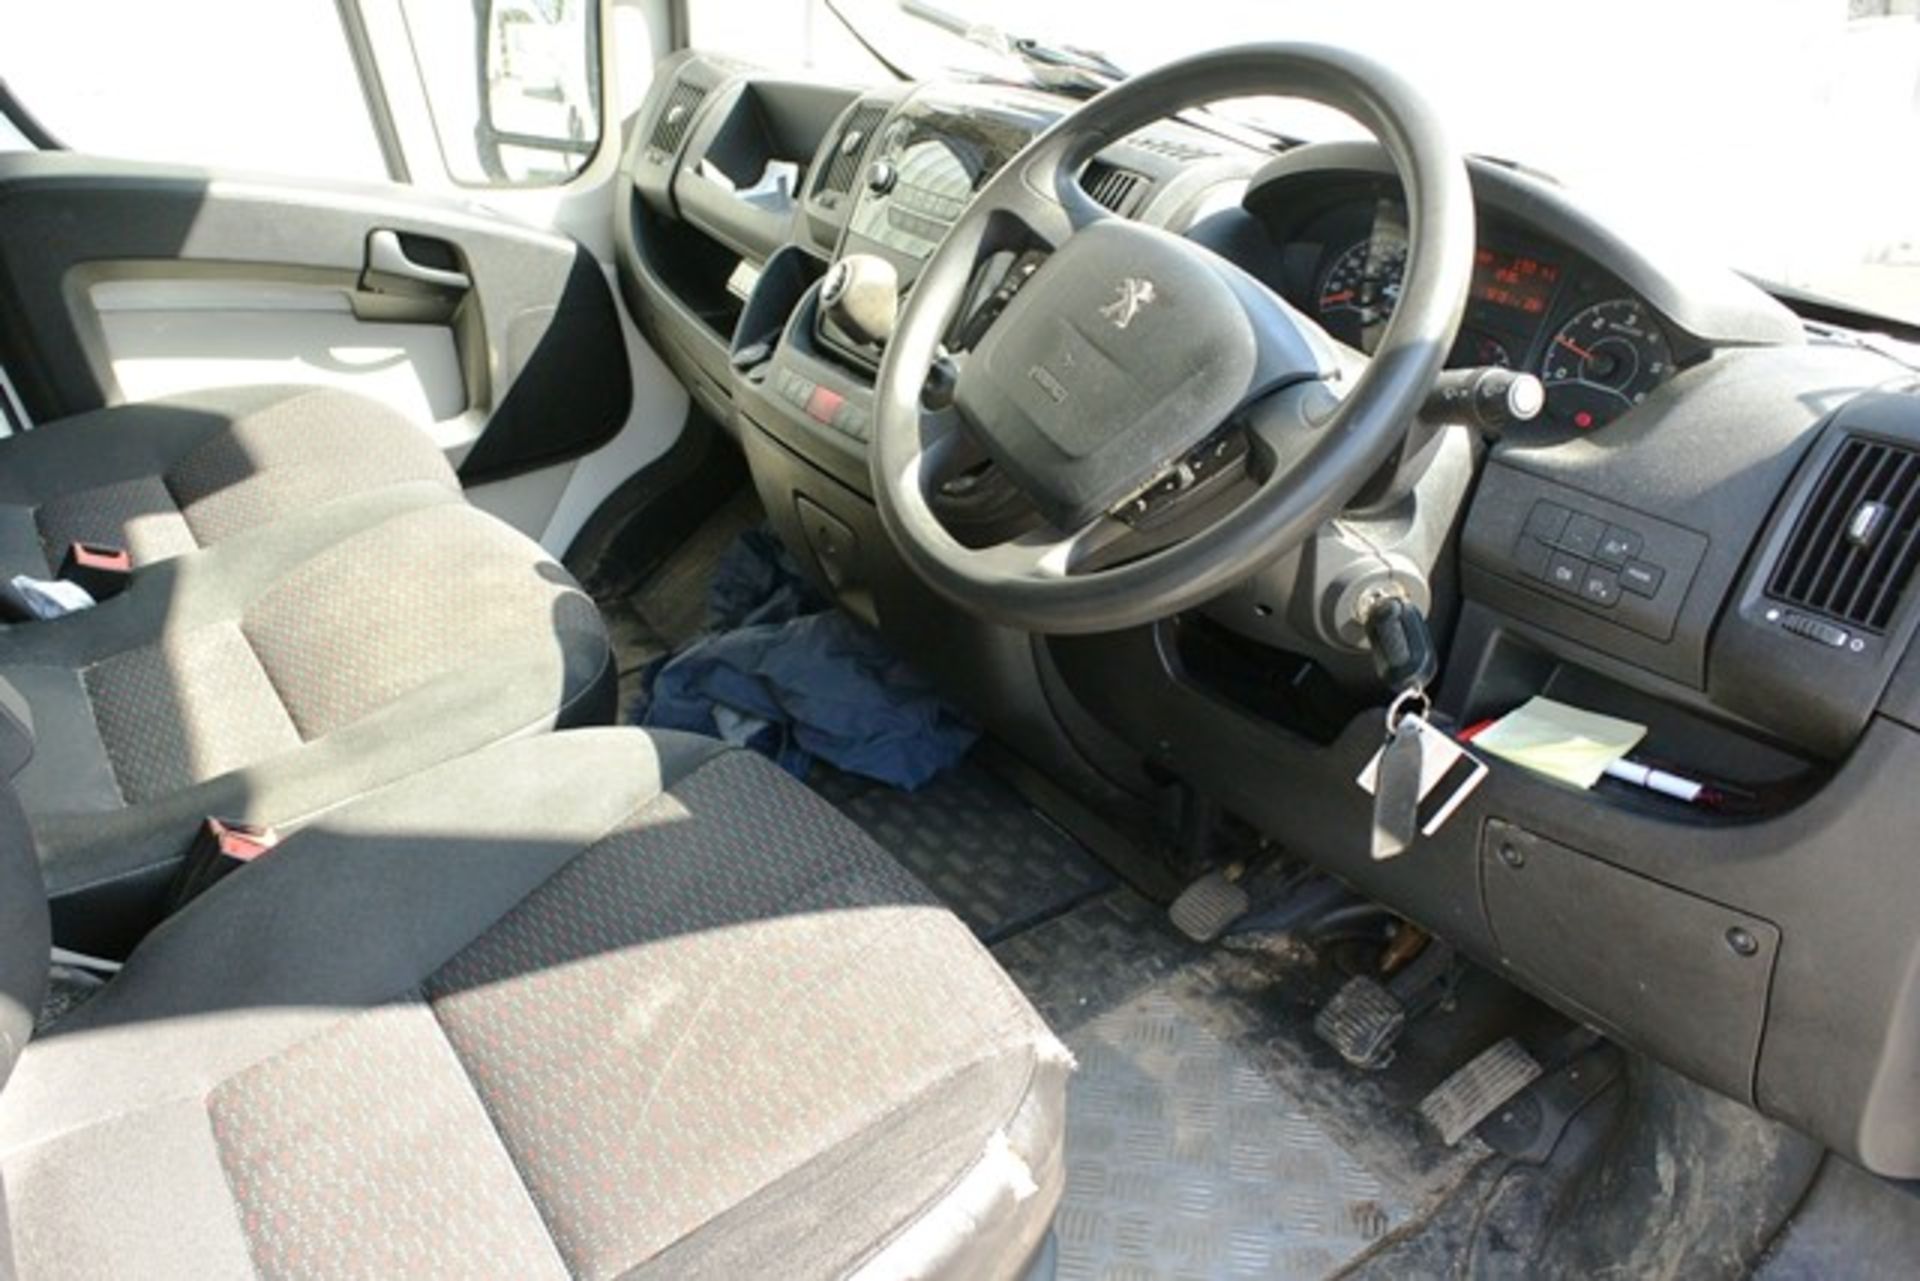 Peugeot Boxer 335 L3H2 HDI LWB refrigerated panel van, 2,198cc Diesel, reg no: WK64 VKB, MOT: 14. - Image 12 of 14